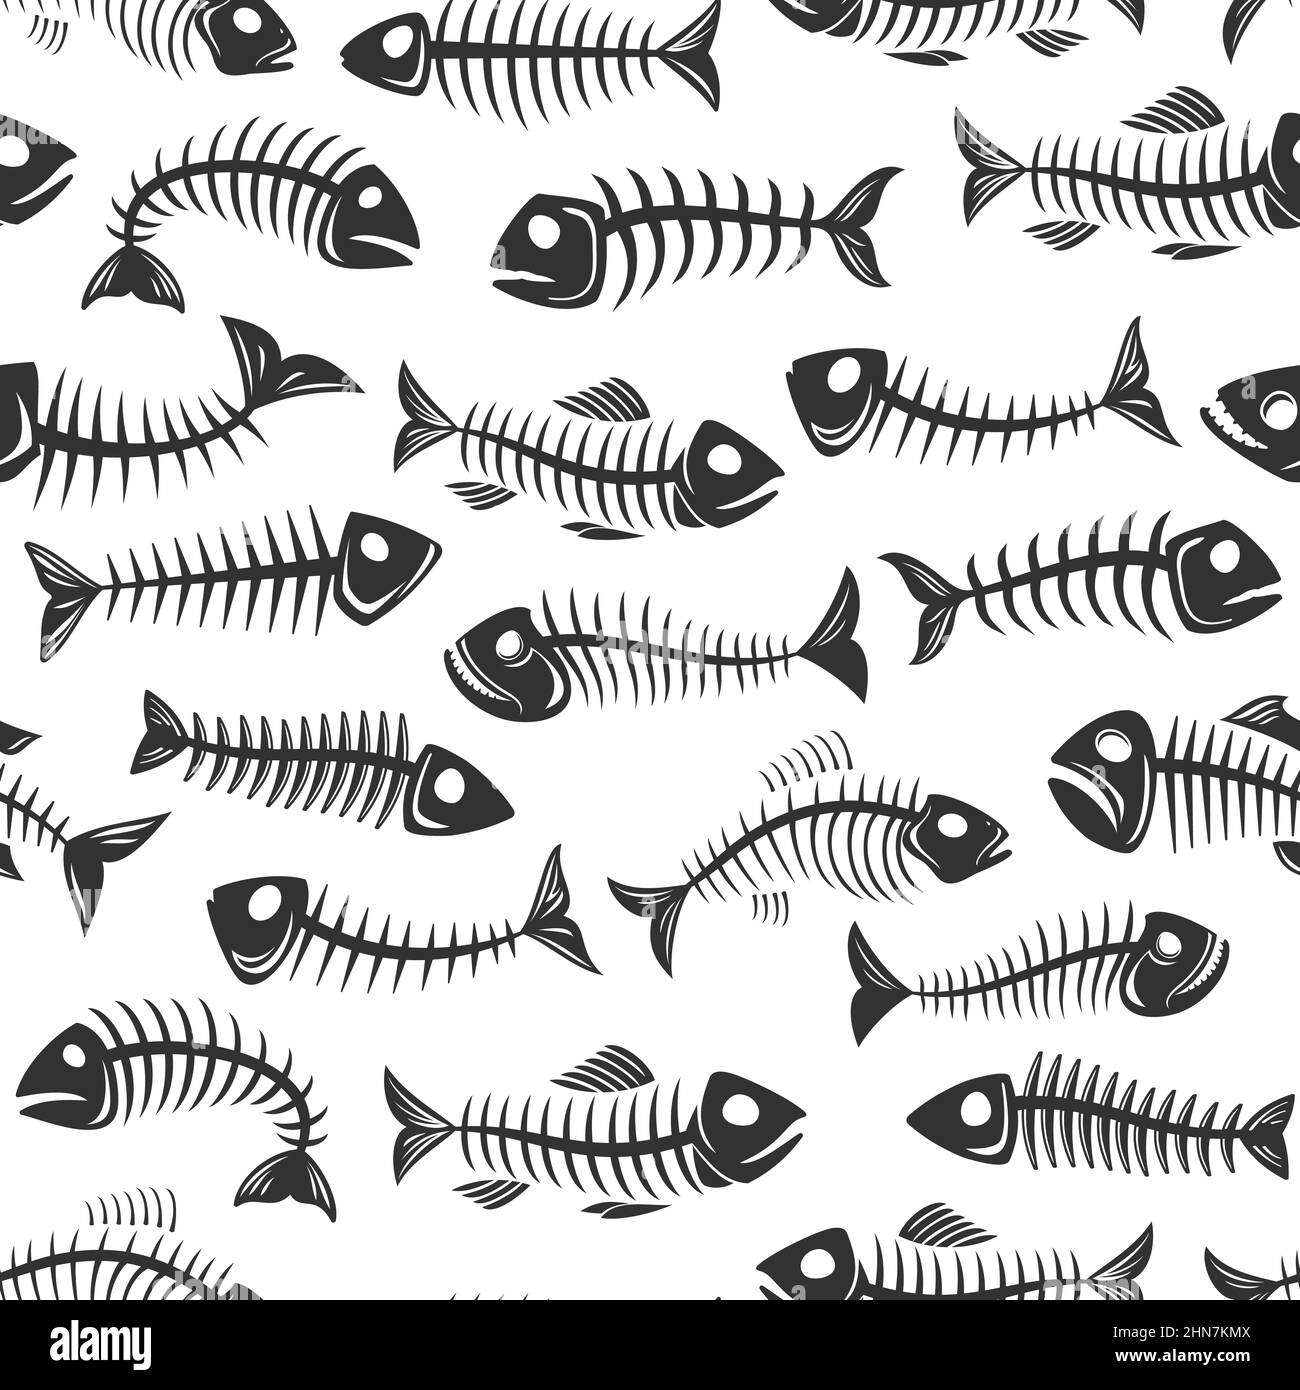 Bermuda fish skeleton by Mark Manley TattooNOW